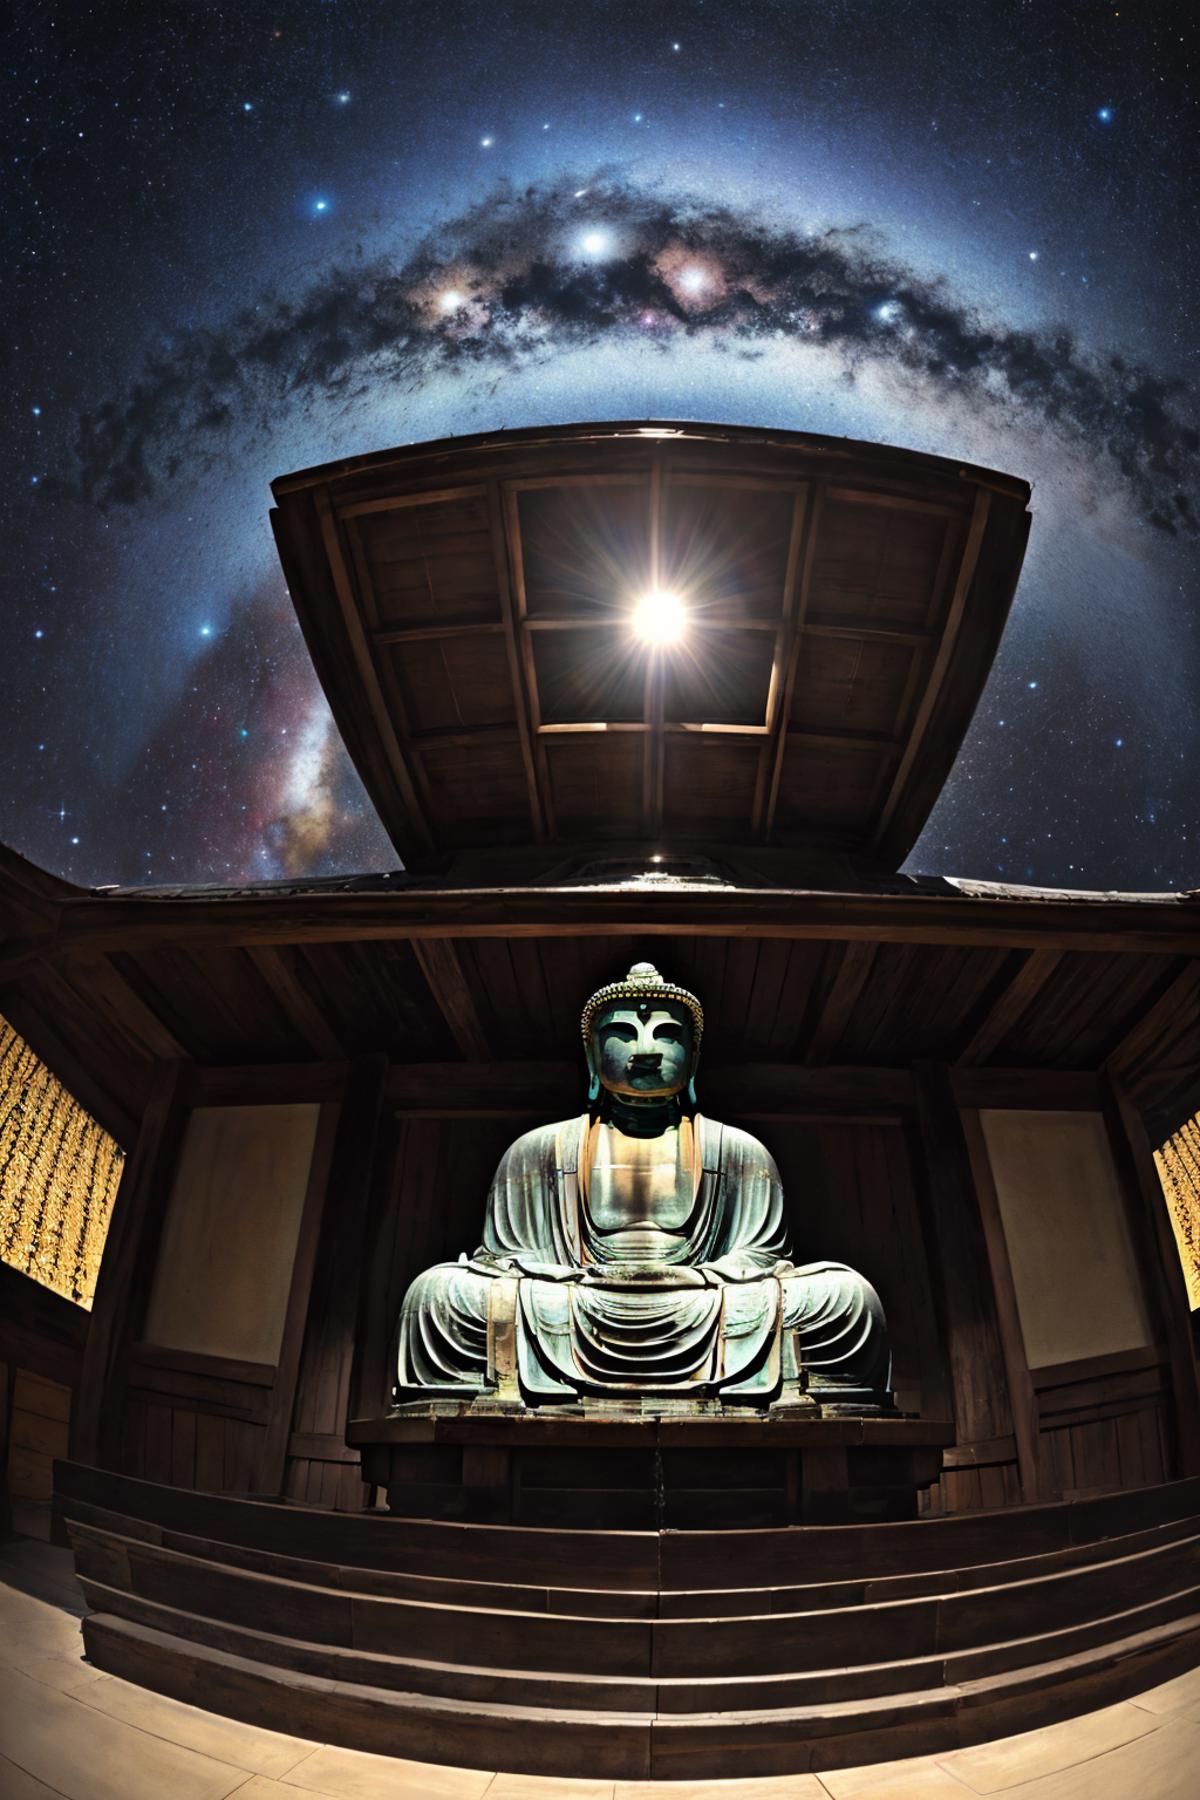 鎌倉大仏 / Kamakura Great Buddha image by Darknoice